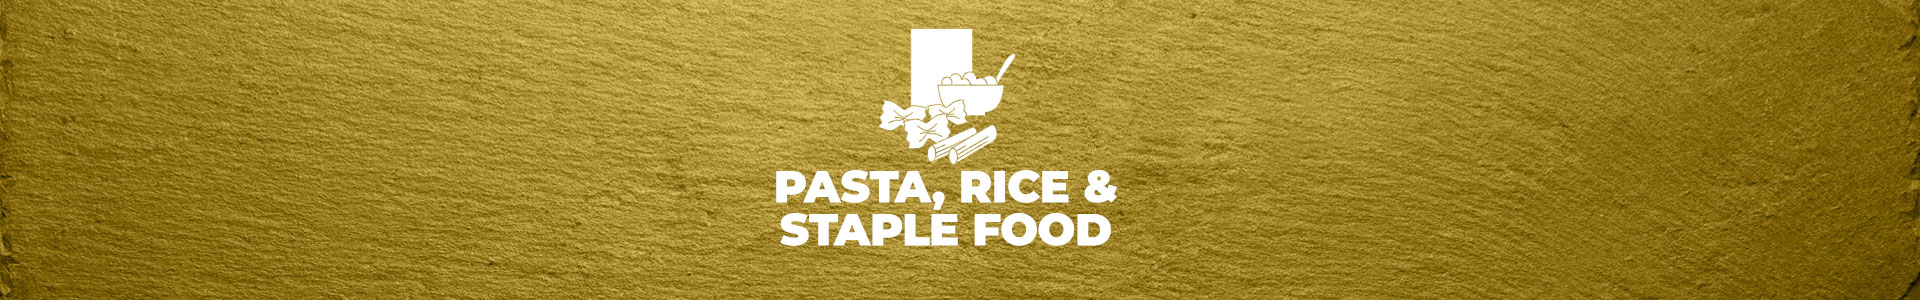 Pasta, Rice & Staple Food